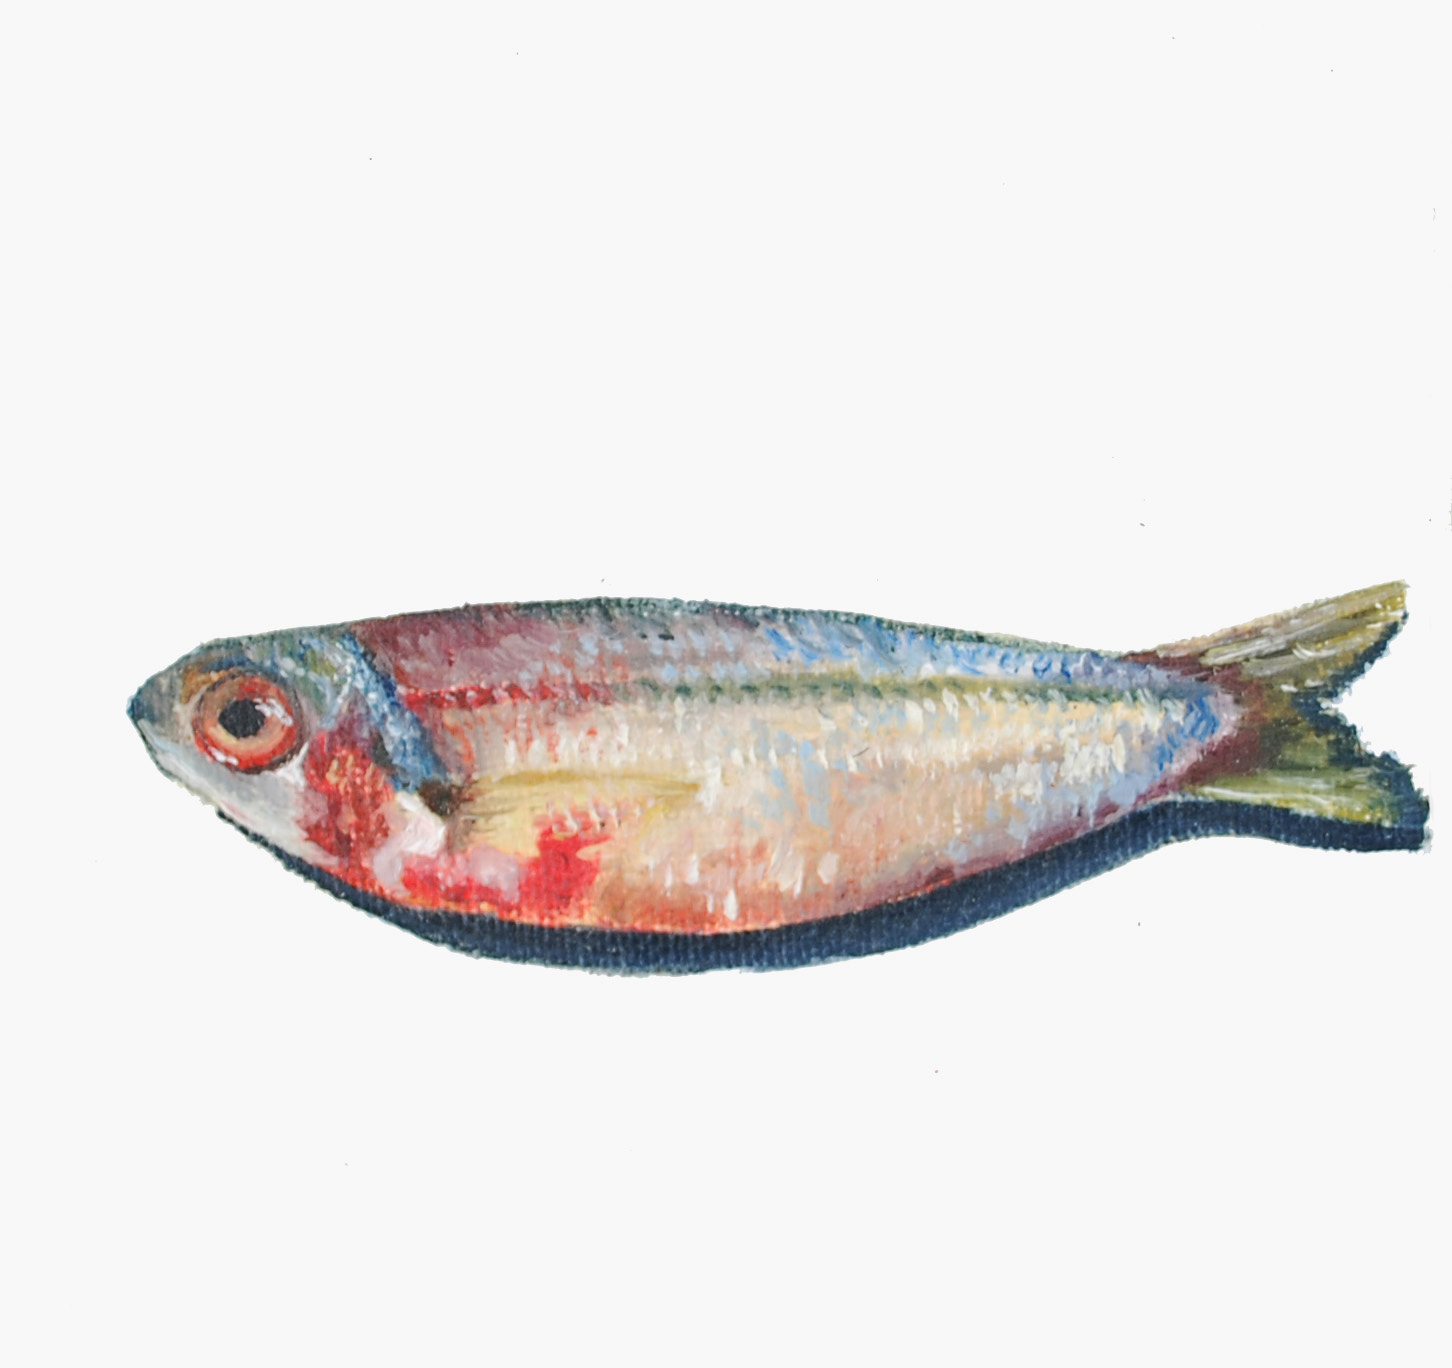 Fish X (10x10cm) oil on canvas